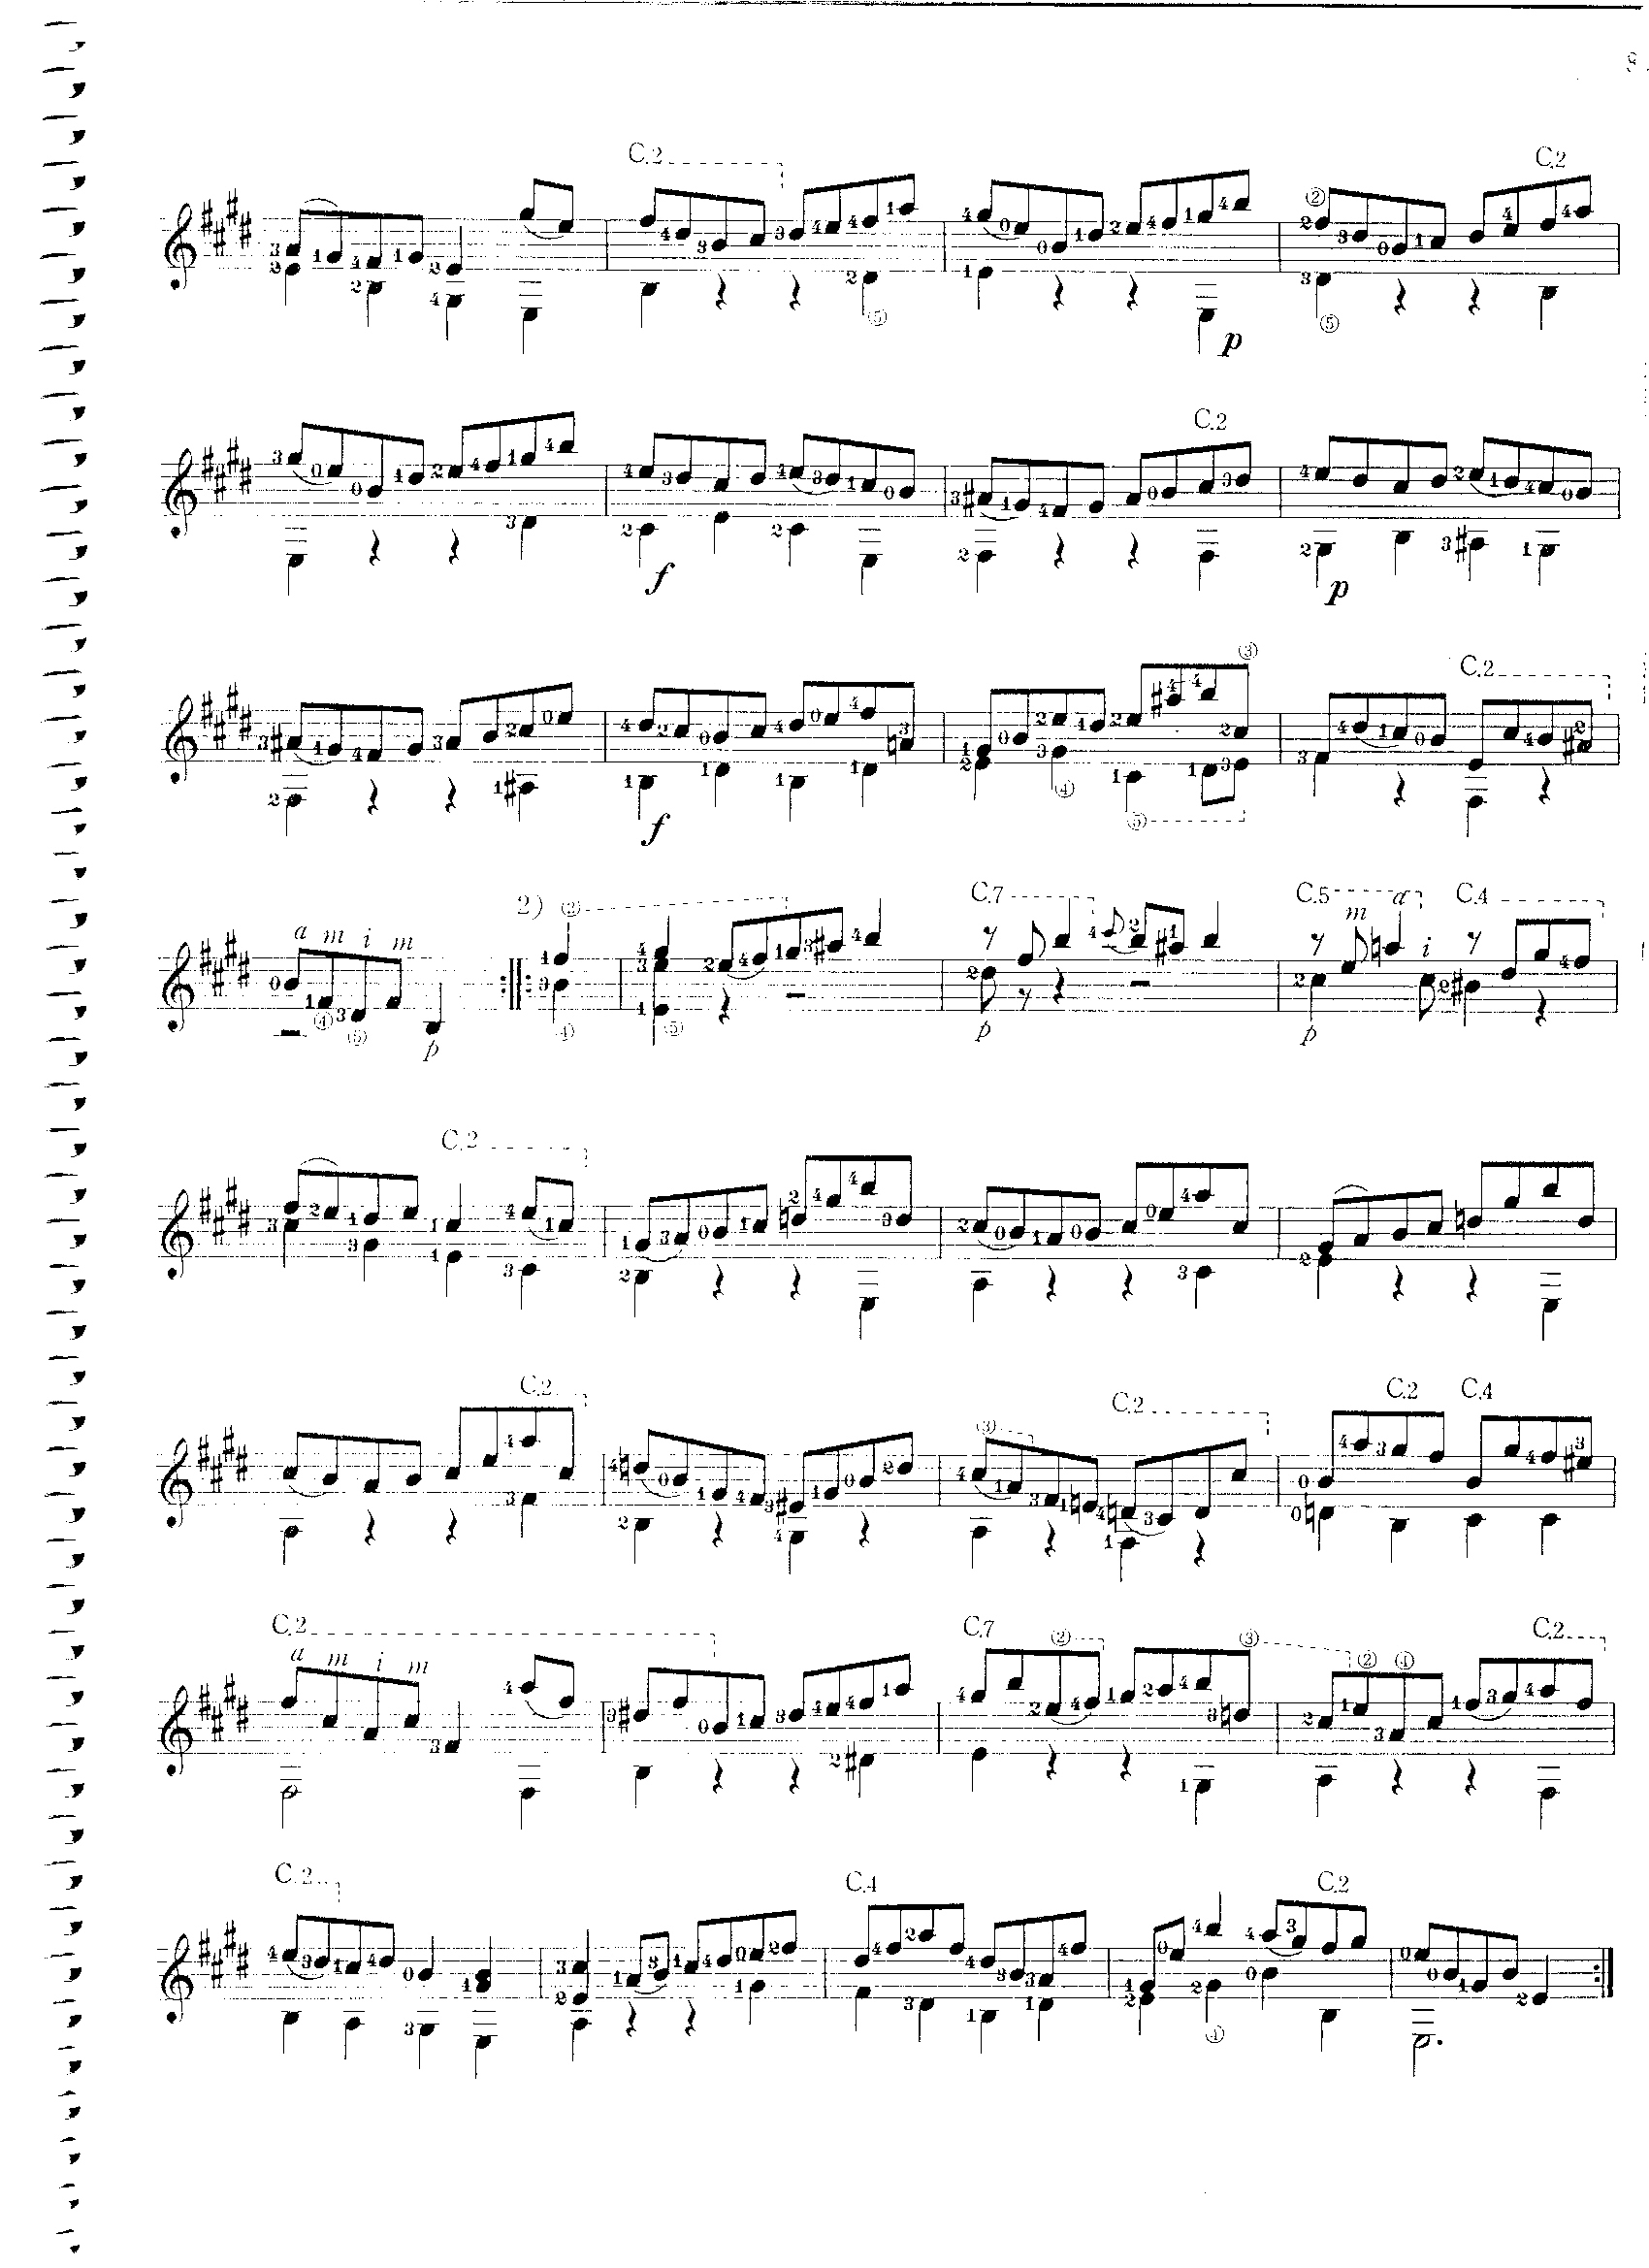 Bach - Prelude from Partita No. 3, BWV 1006 Sheet music for Cello ...